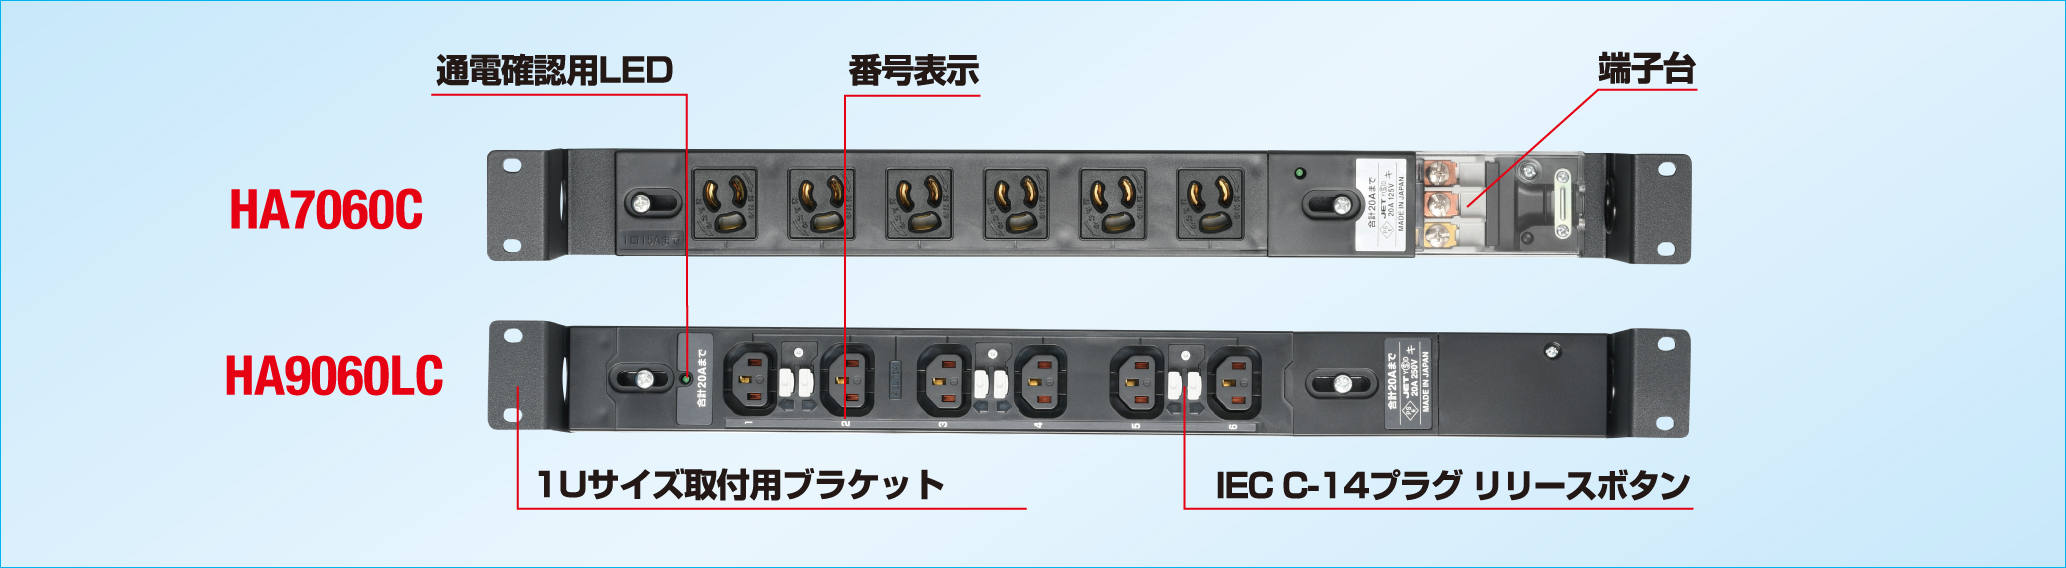 HA9200LVS アメリカン電機 IEC C-13+C-19 コンセントバー20コ口 スリムタイプ 接地形2P 20A 250V (HA920VS  後継品)